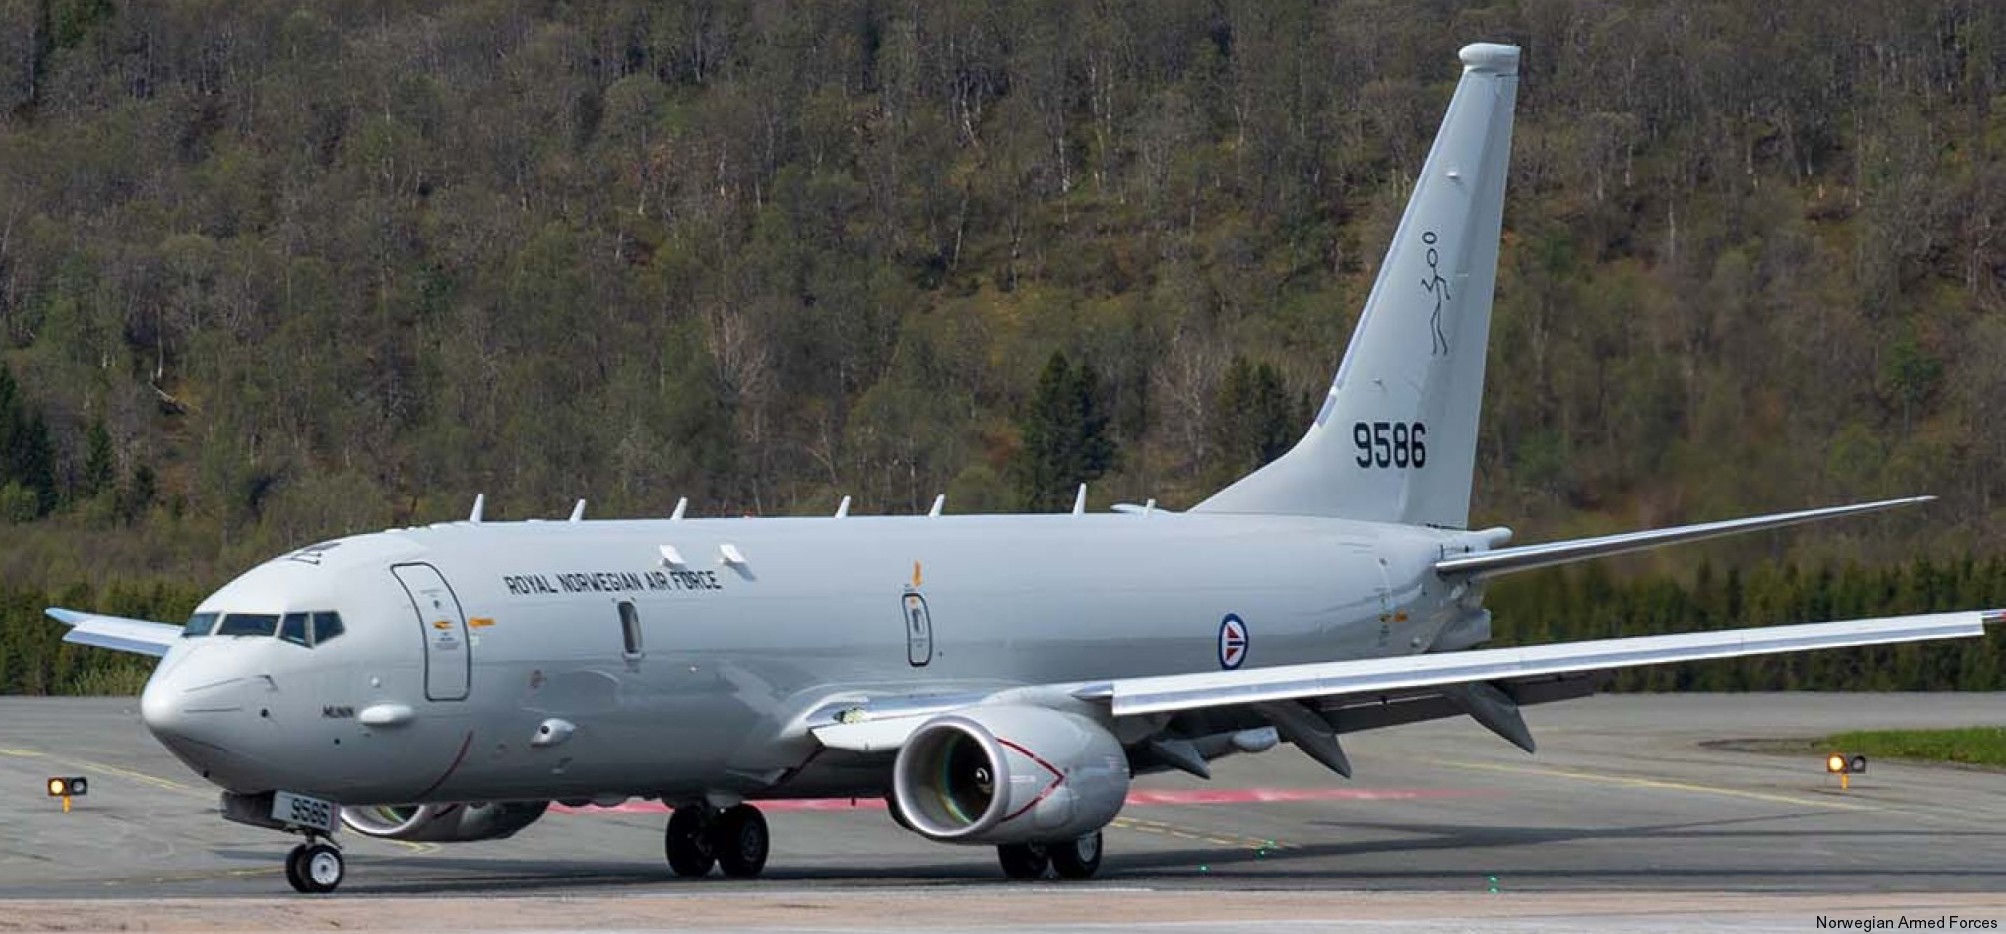 p-8a poseidon maritime patrol aircraft royal norwegian air force luftforsvaret 9586 munin 06